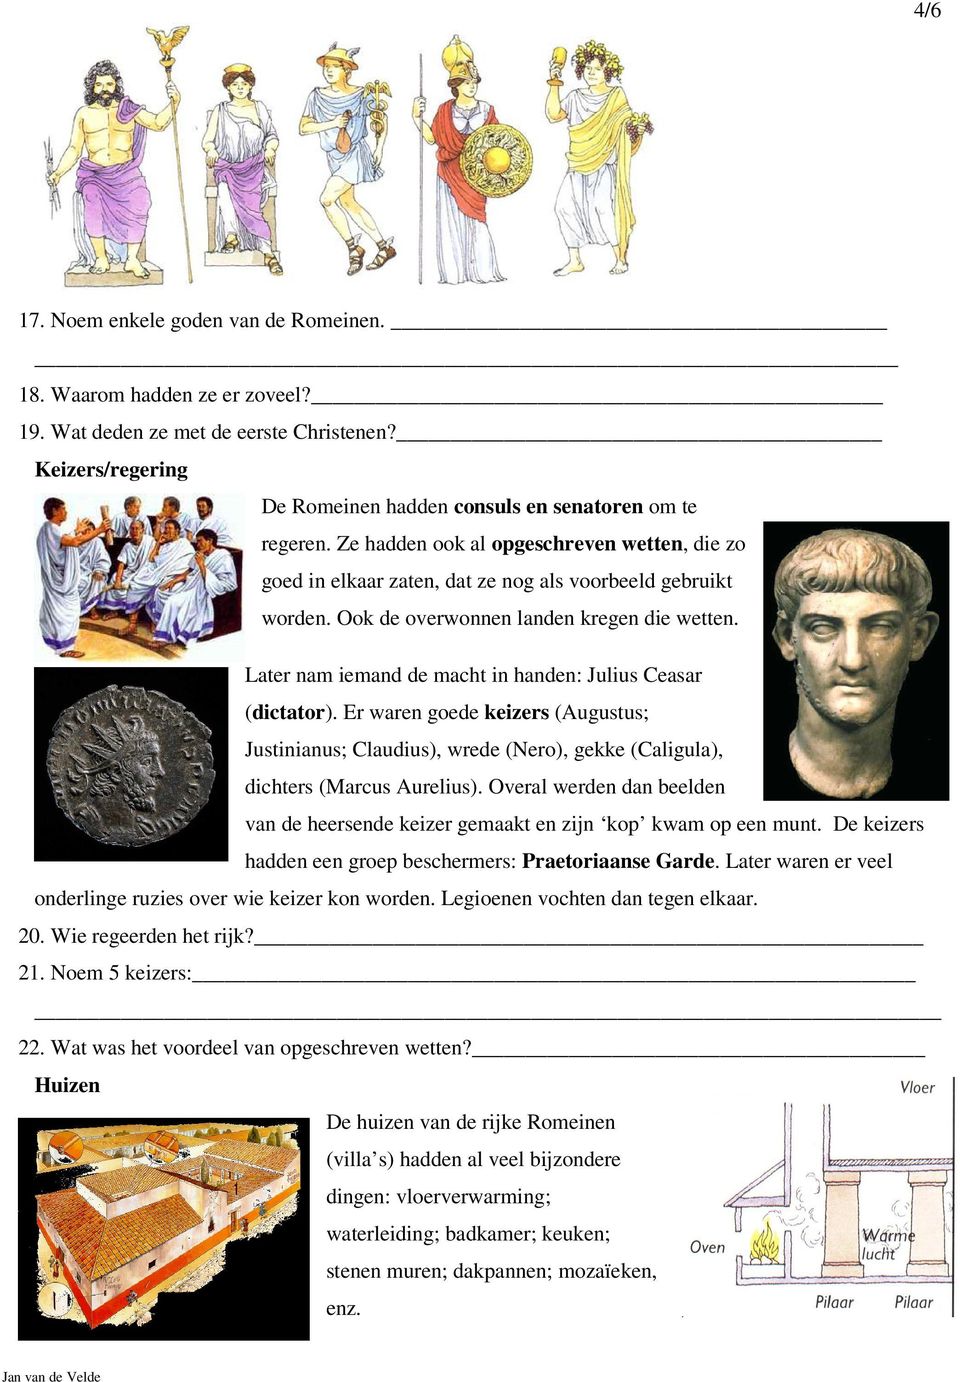 Later nam iemand de macht in handen: Julius Ceasar (dictator). Er waren goede keizers (Augustus; Justinianus; Claudius), wrede (Nero), gekke (Caligula), dichters (Marcus Aurelius).